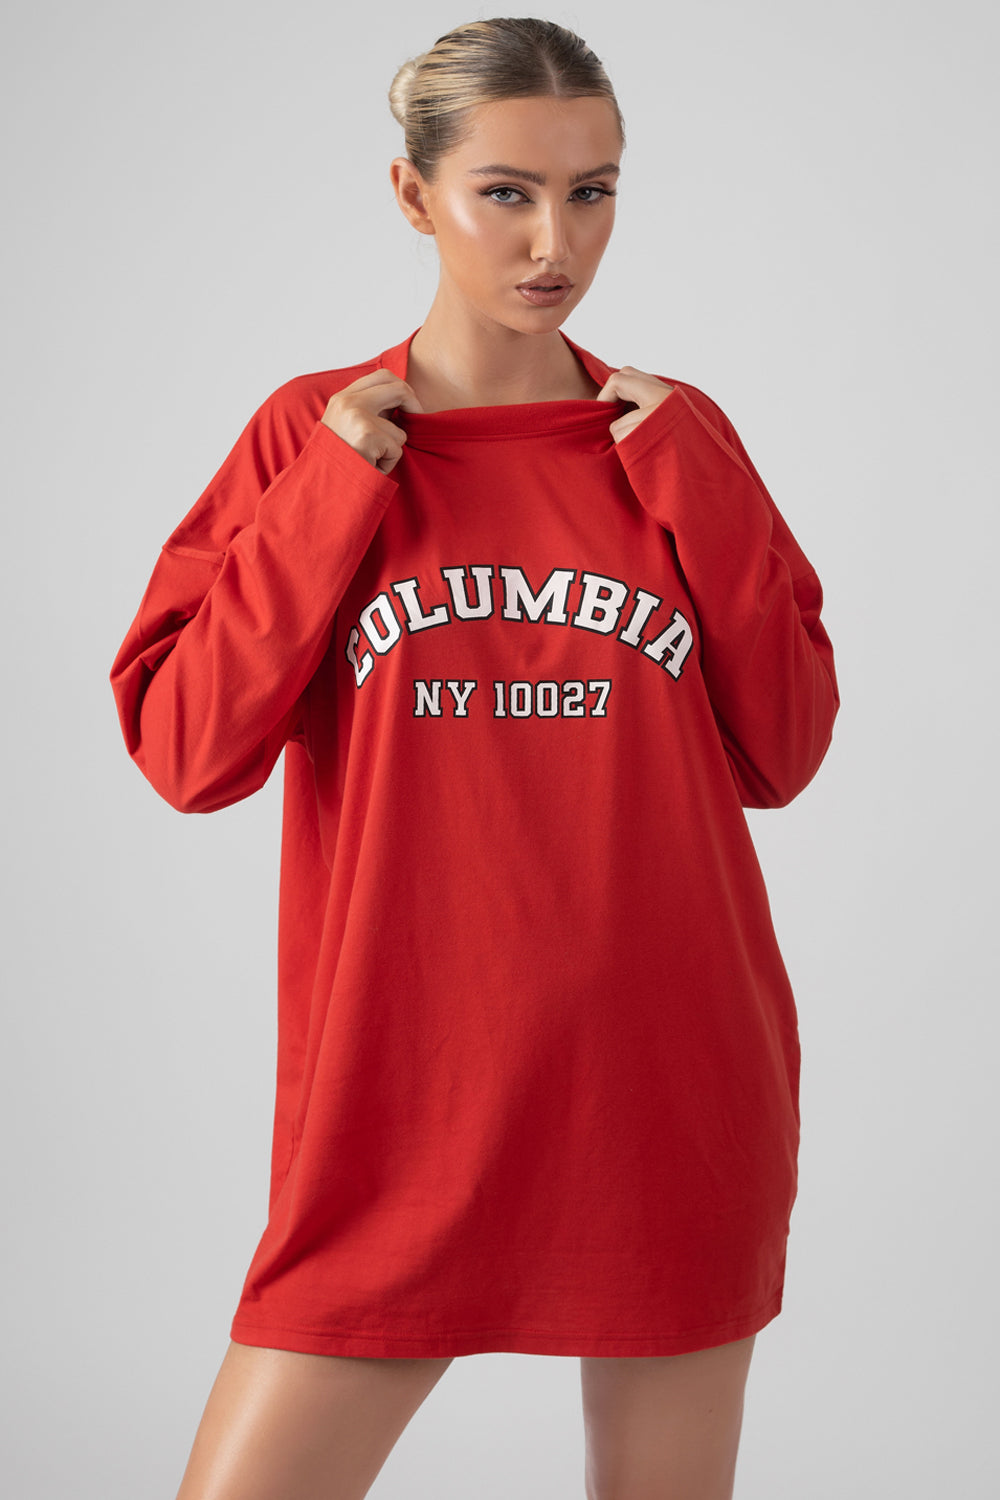 COLUMBIA SLOGAN LONG SLEEVED T-SHIRT DRESS RED